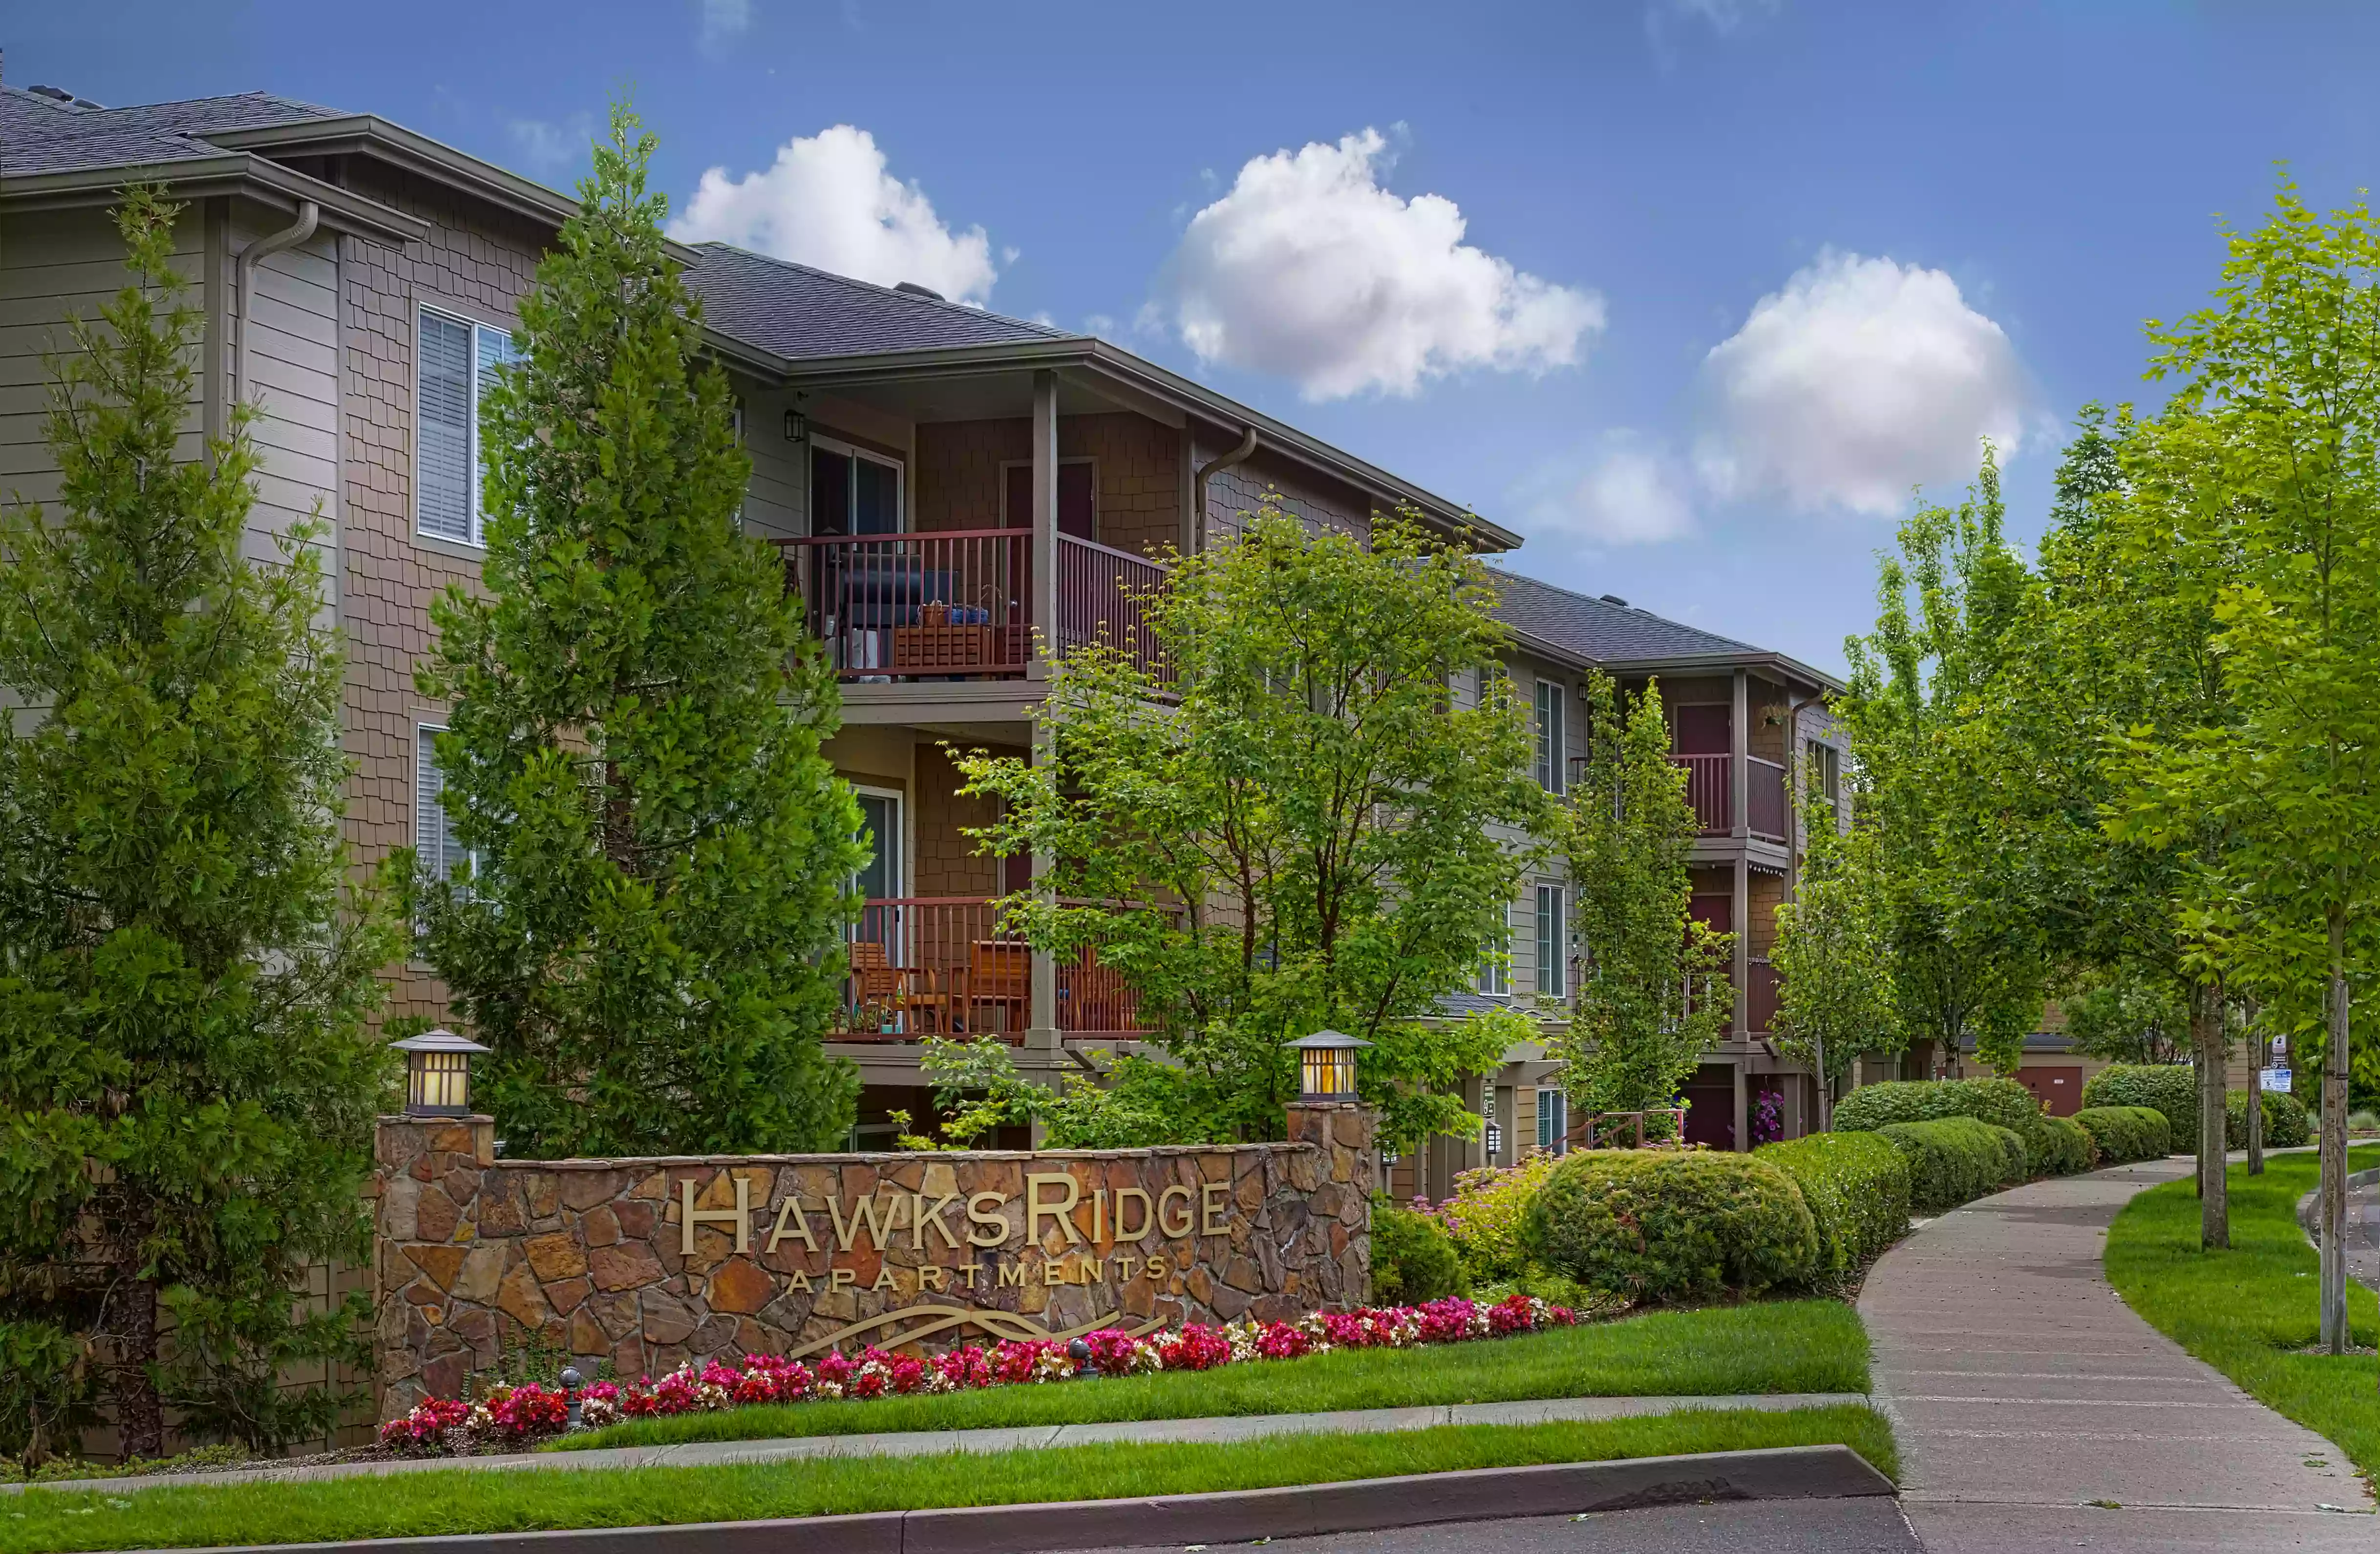 Hawks Ridge Apartments